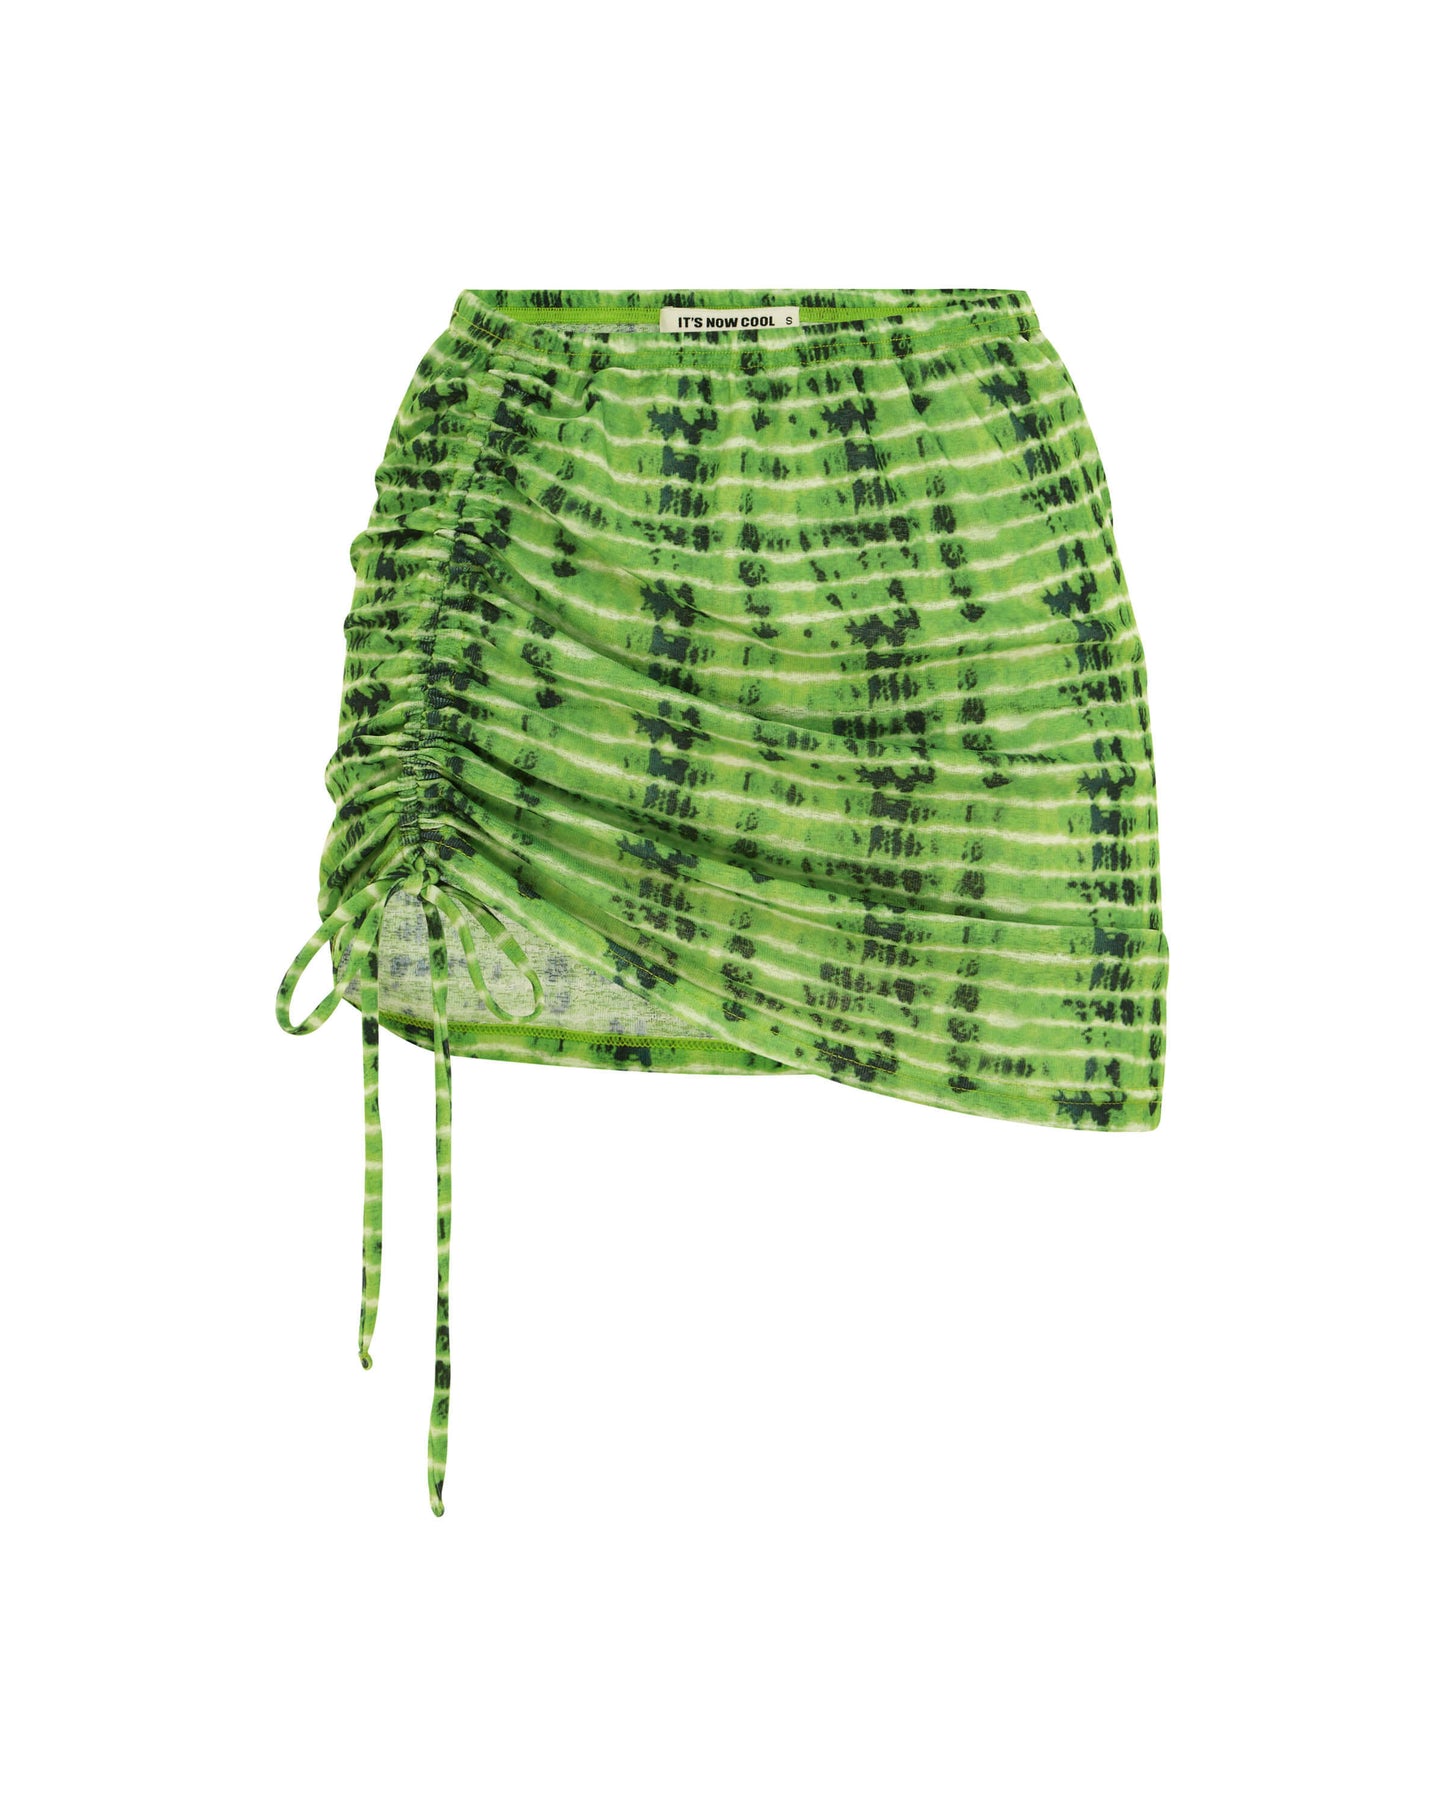 It's Now Cool Beachwear - Rouch Skirt - Amazon